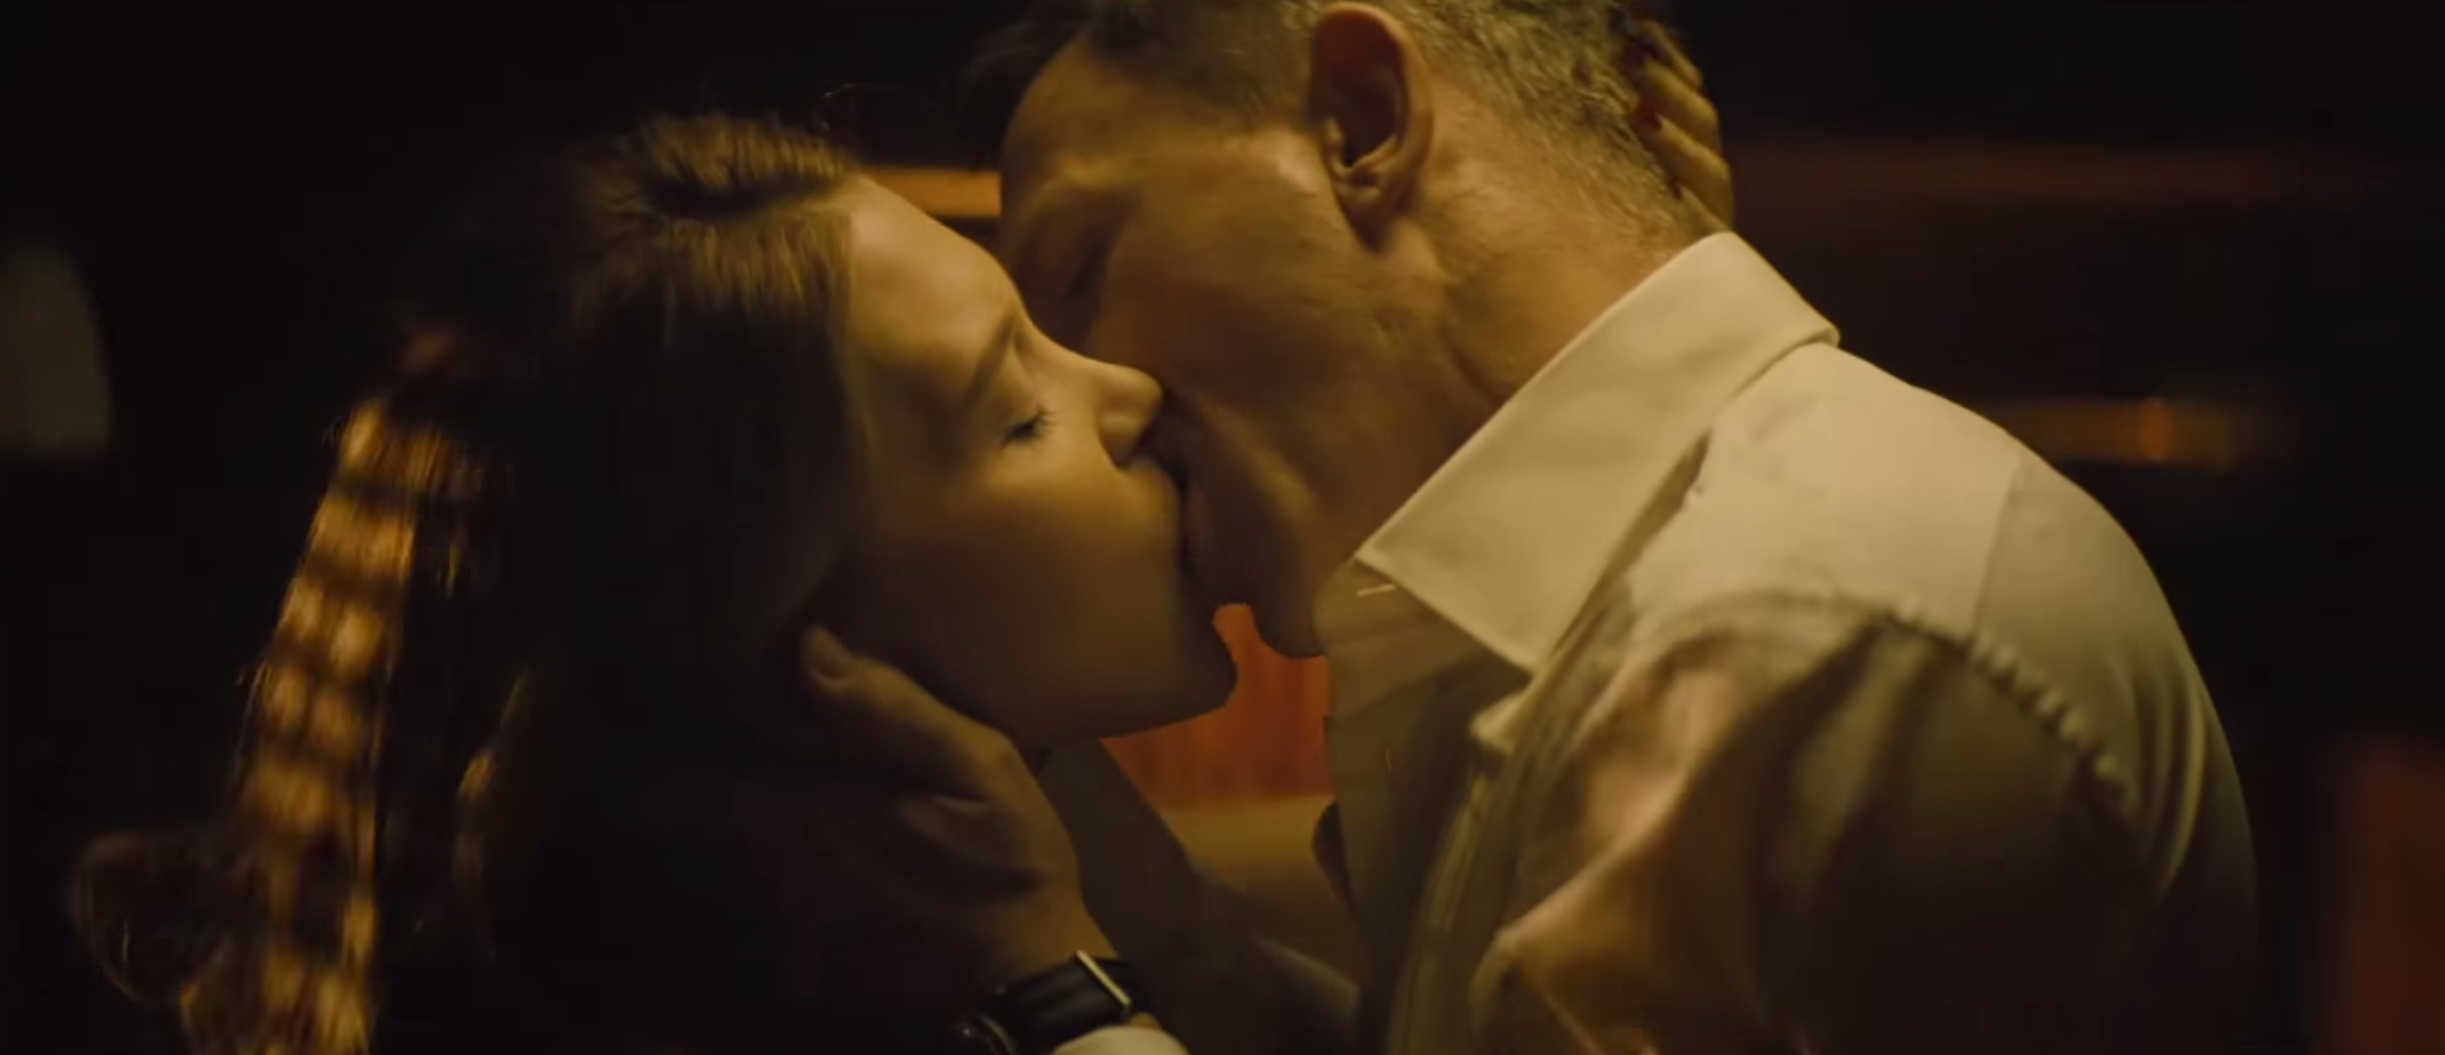 7 kiss. Агент 007 спектр Леа Сейду поцелуй. Леа Сейду 007.